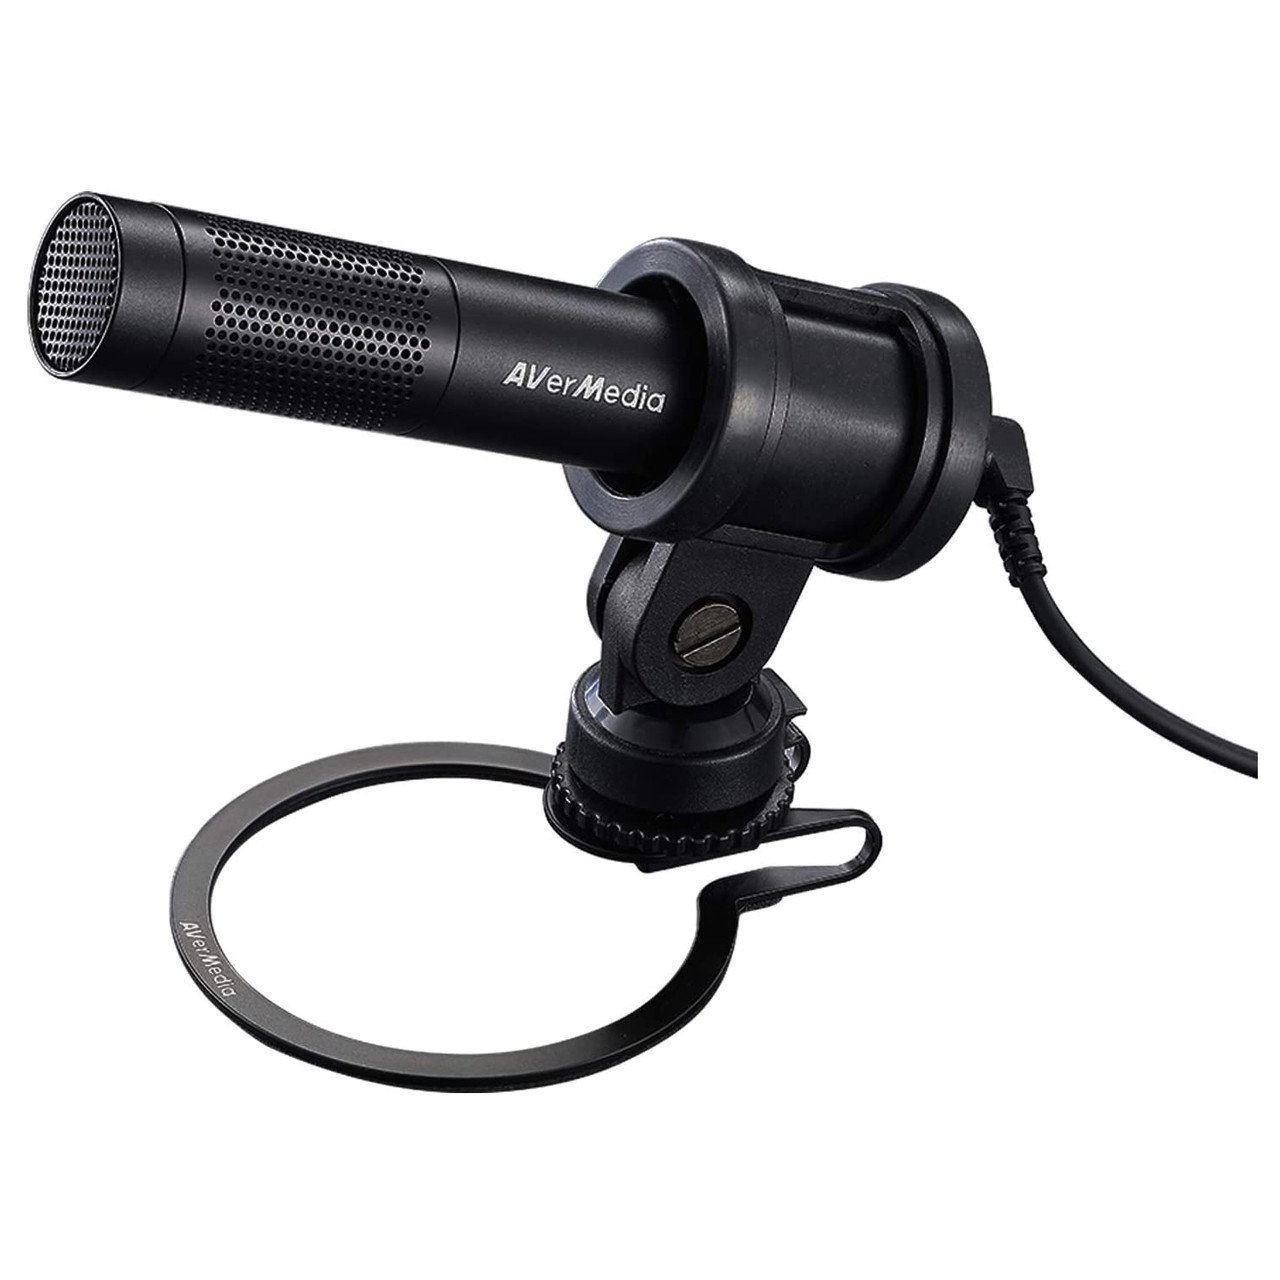 AVerMedia AM133 Live Streamer Mic, 3.5mm Unidirectional Shotgun Microphone, for DSLR, Mobile, Vlog, Streaming, Podcasting